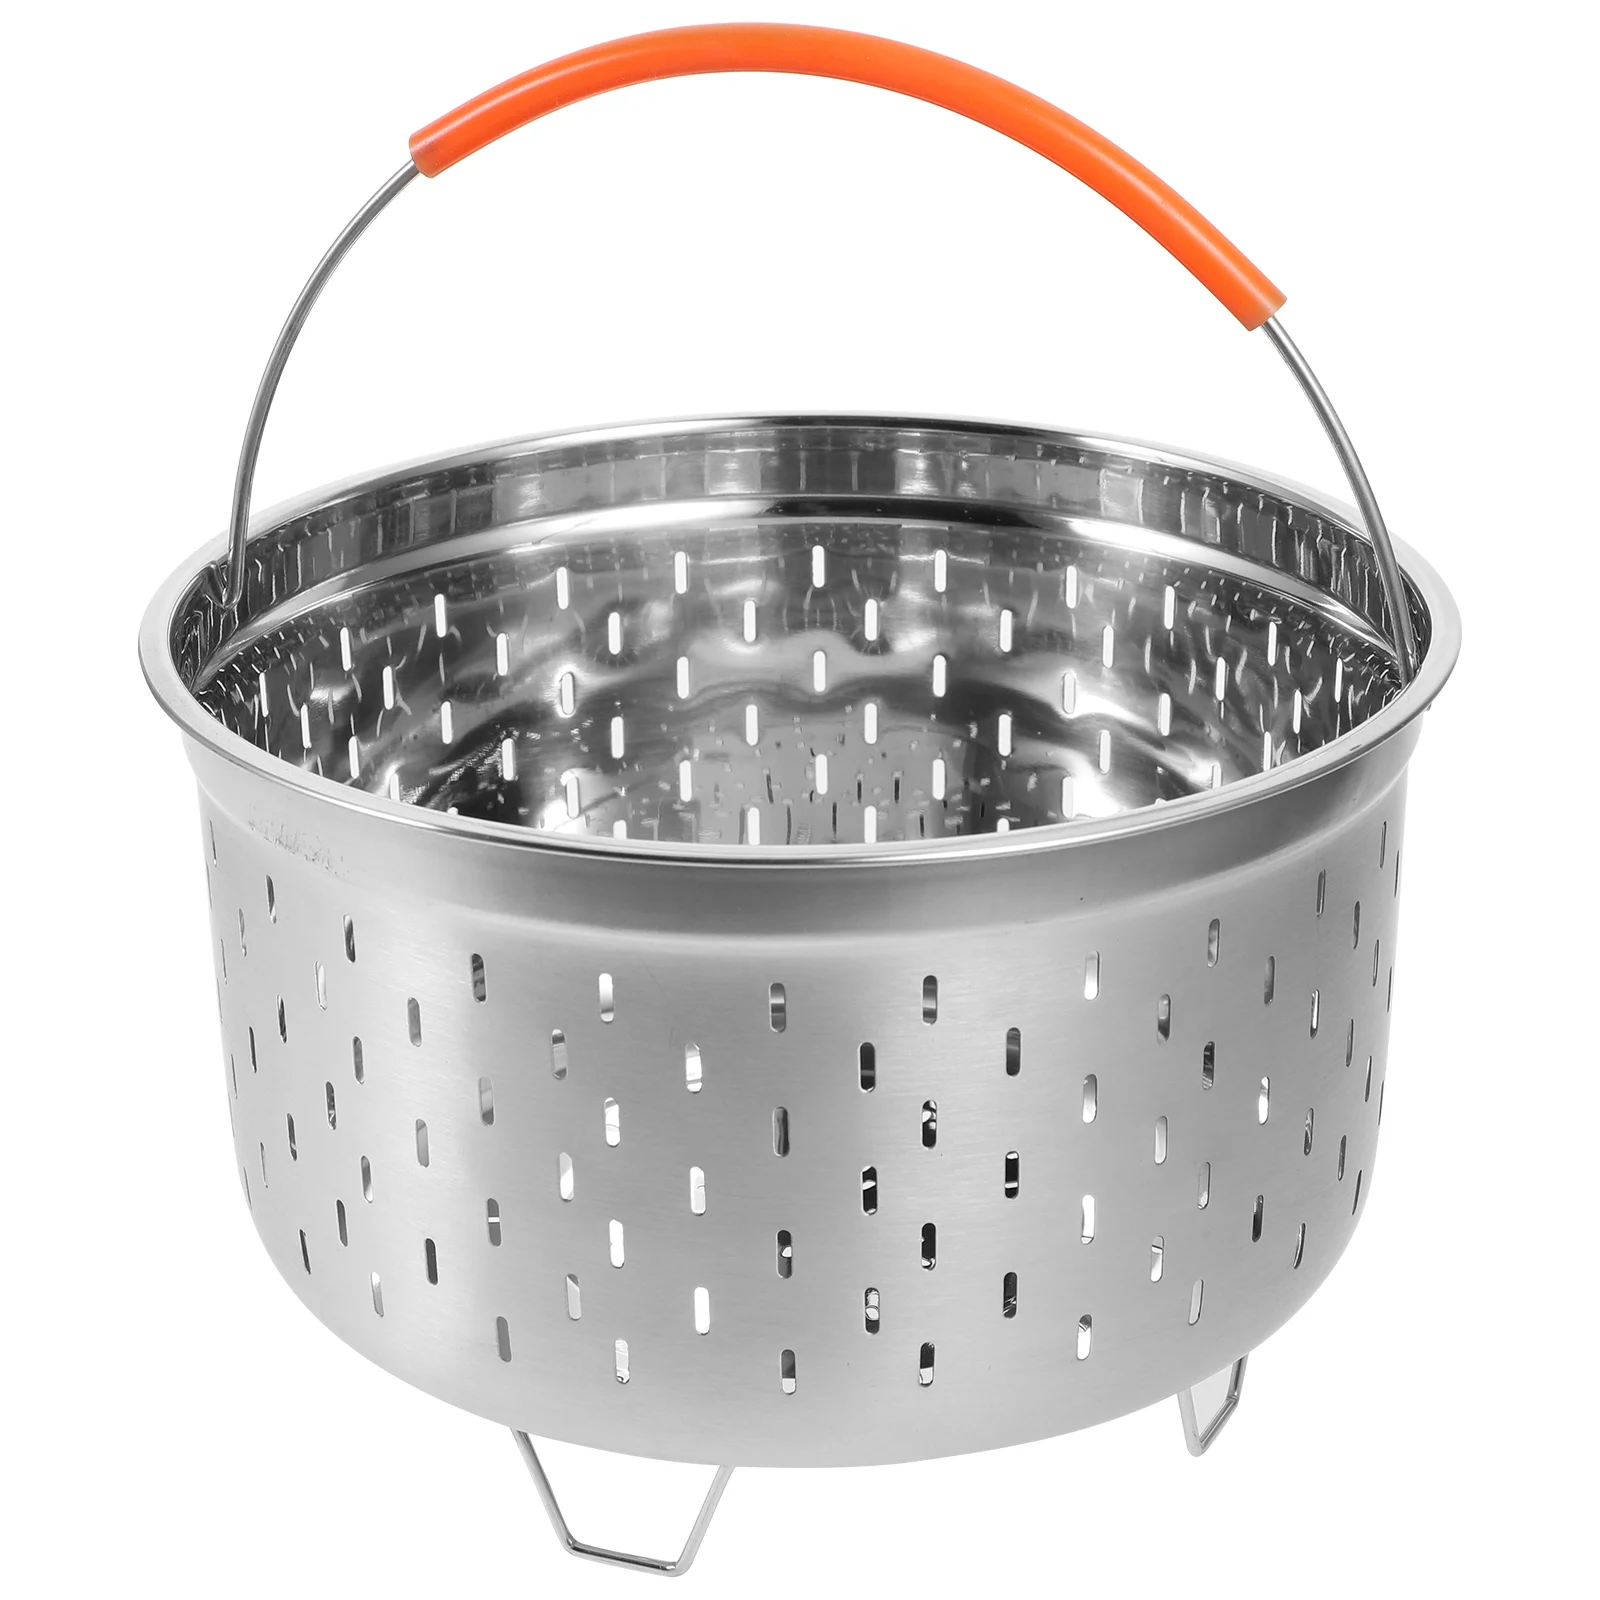 

Stainless Steel Rice Steamer Metal Basket Convenient Kitchen Vegetable Electric Cooker Pot Rack Insert Baskets Cooking